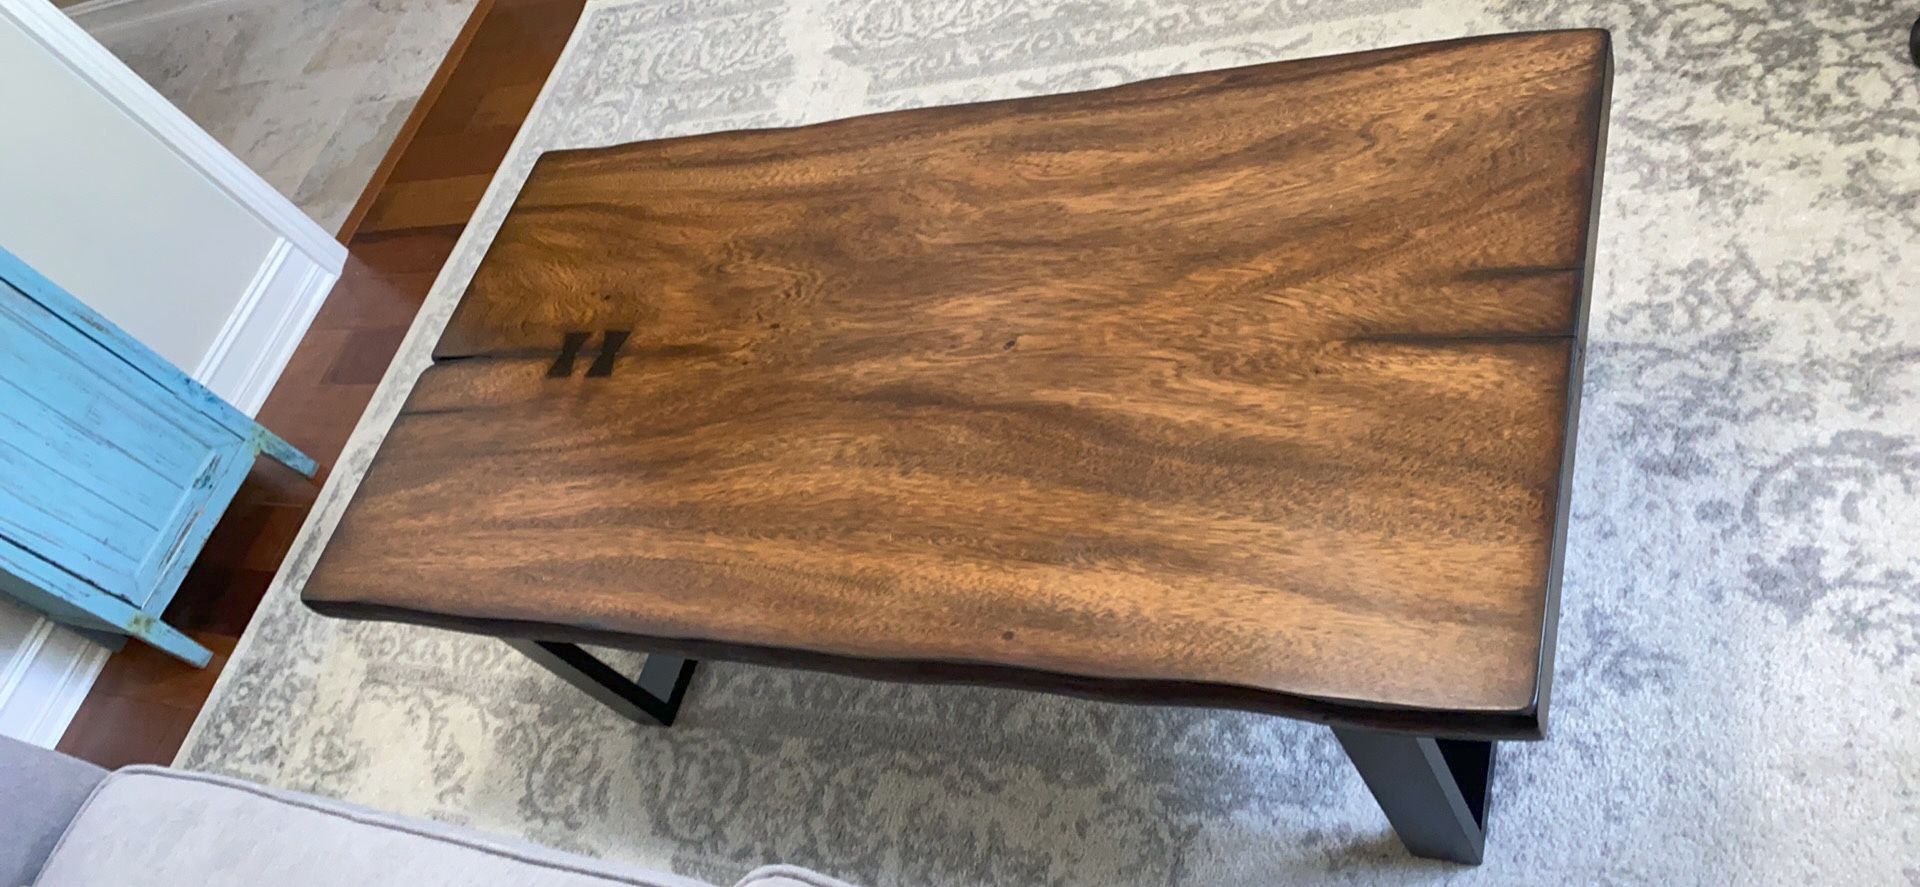 Beautiful wood coffee table